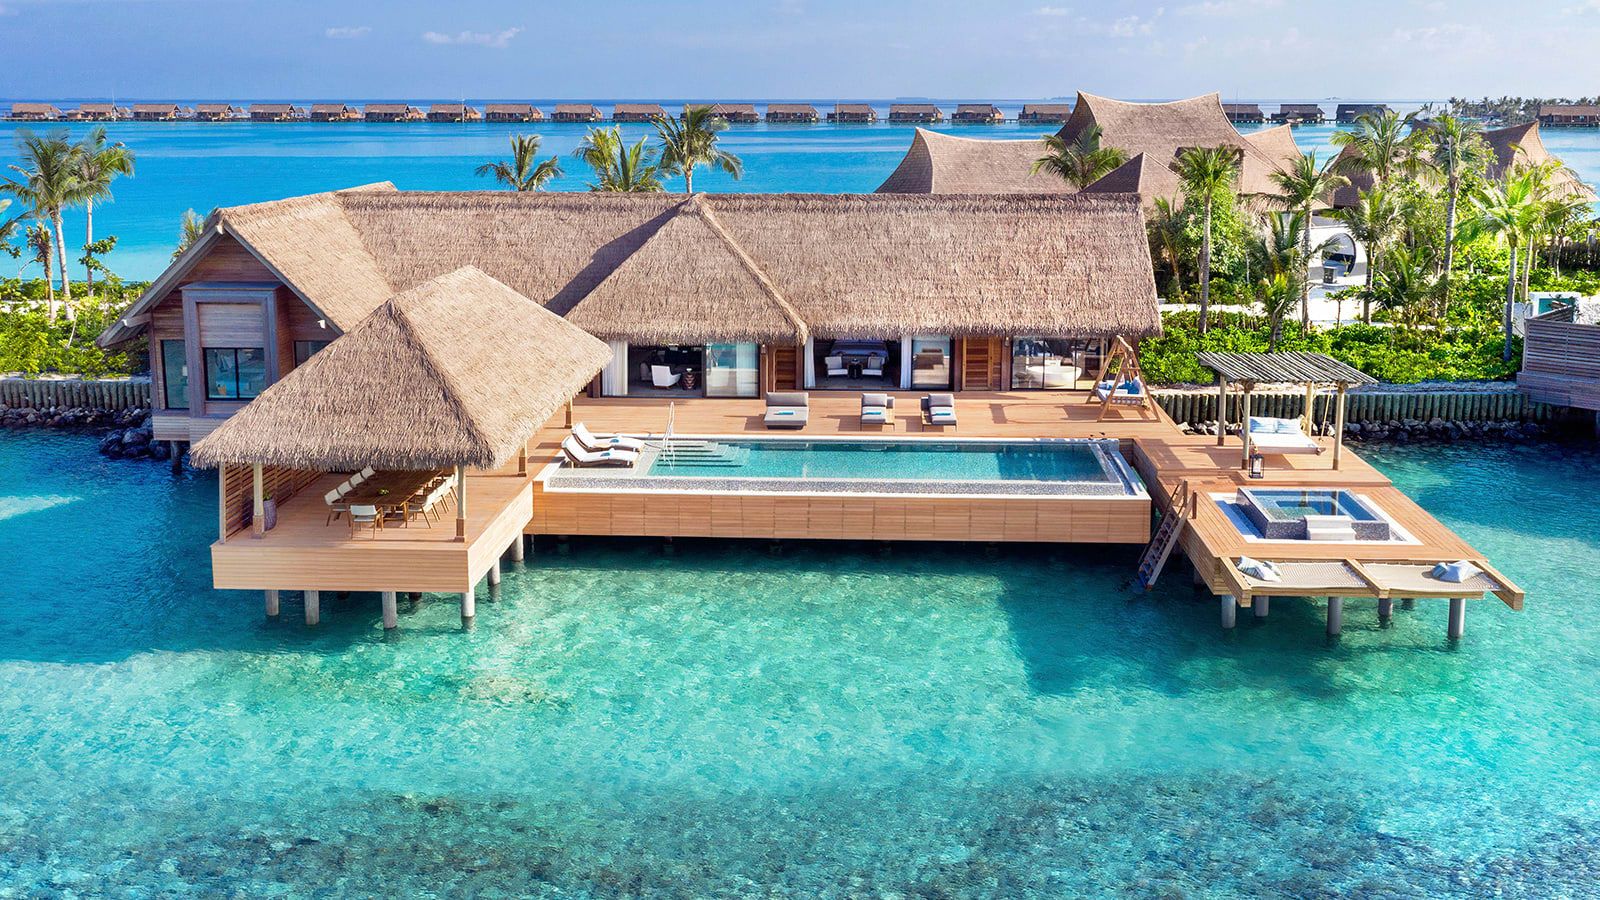 Floating villas in the Maldives